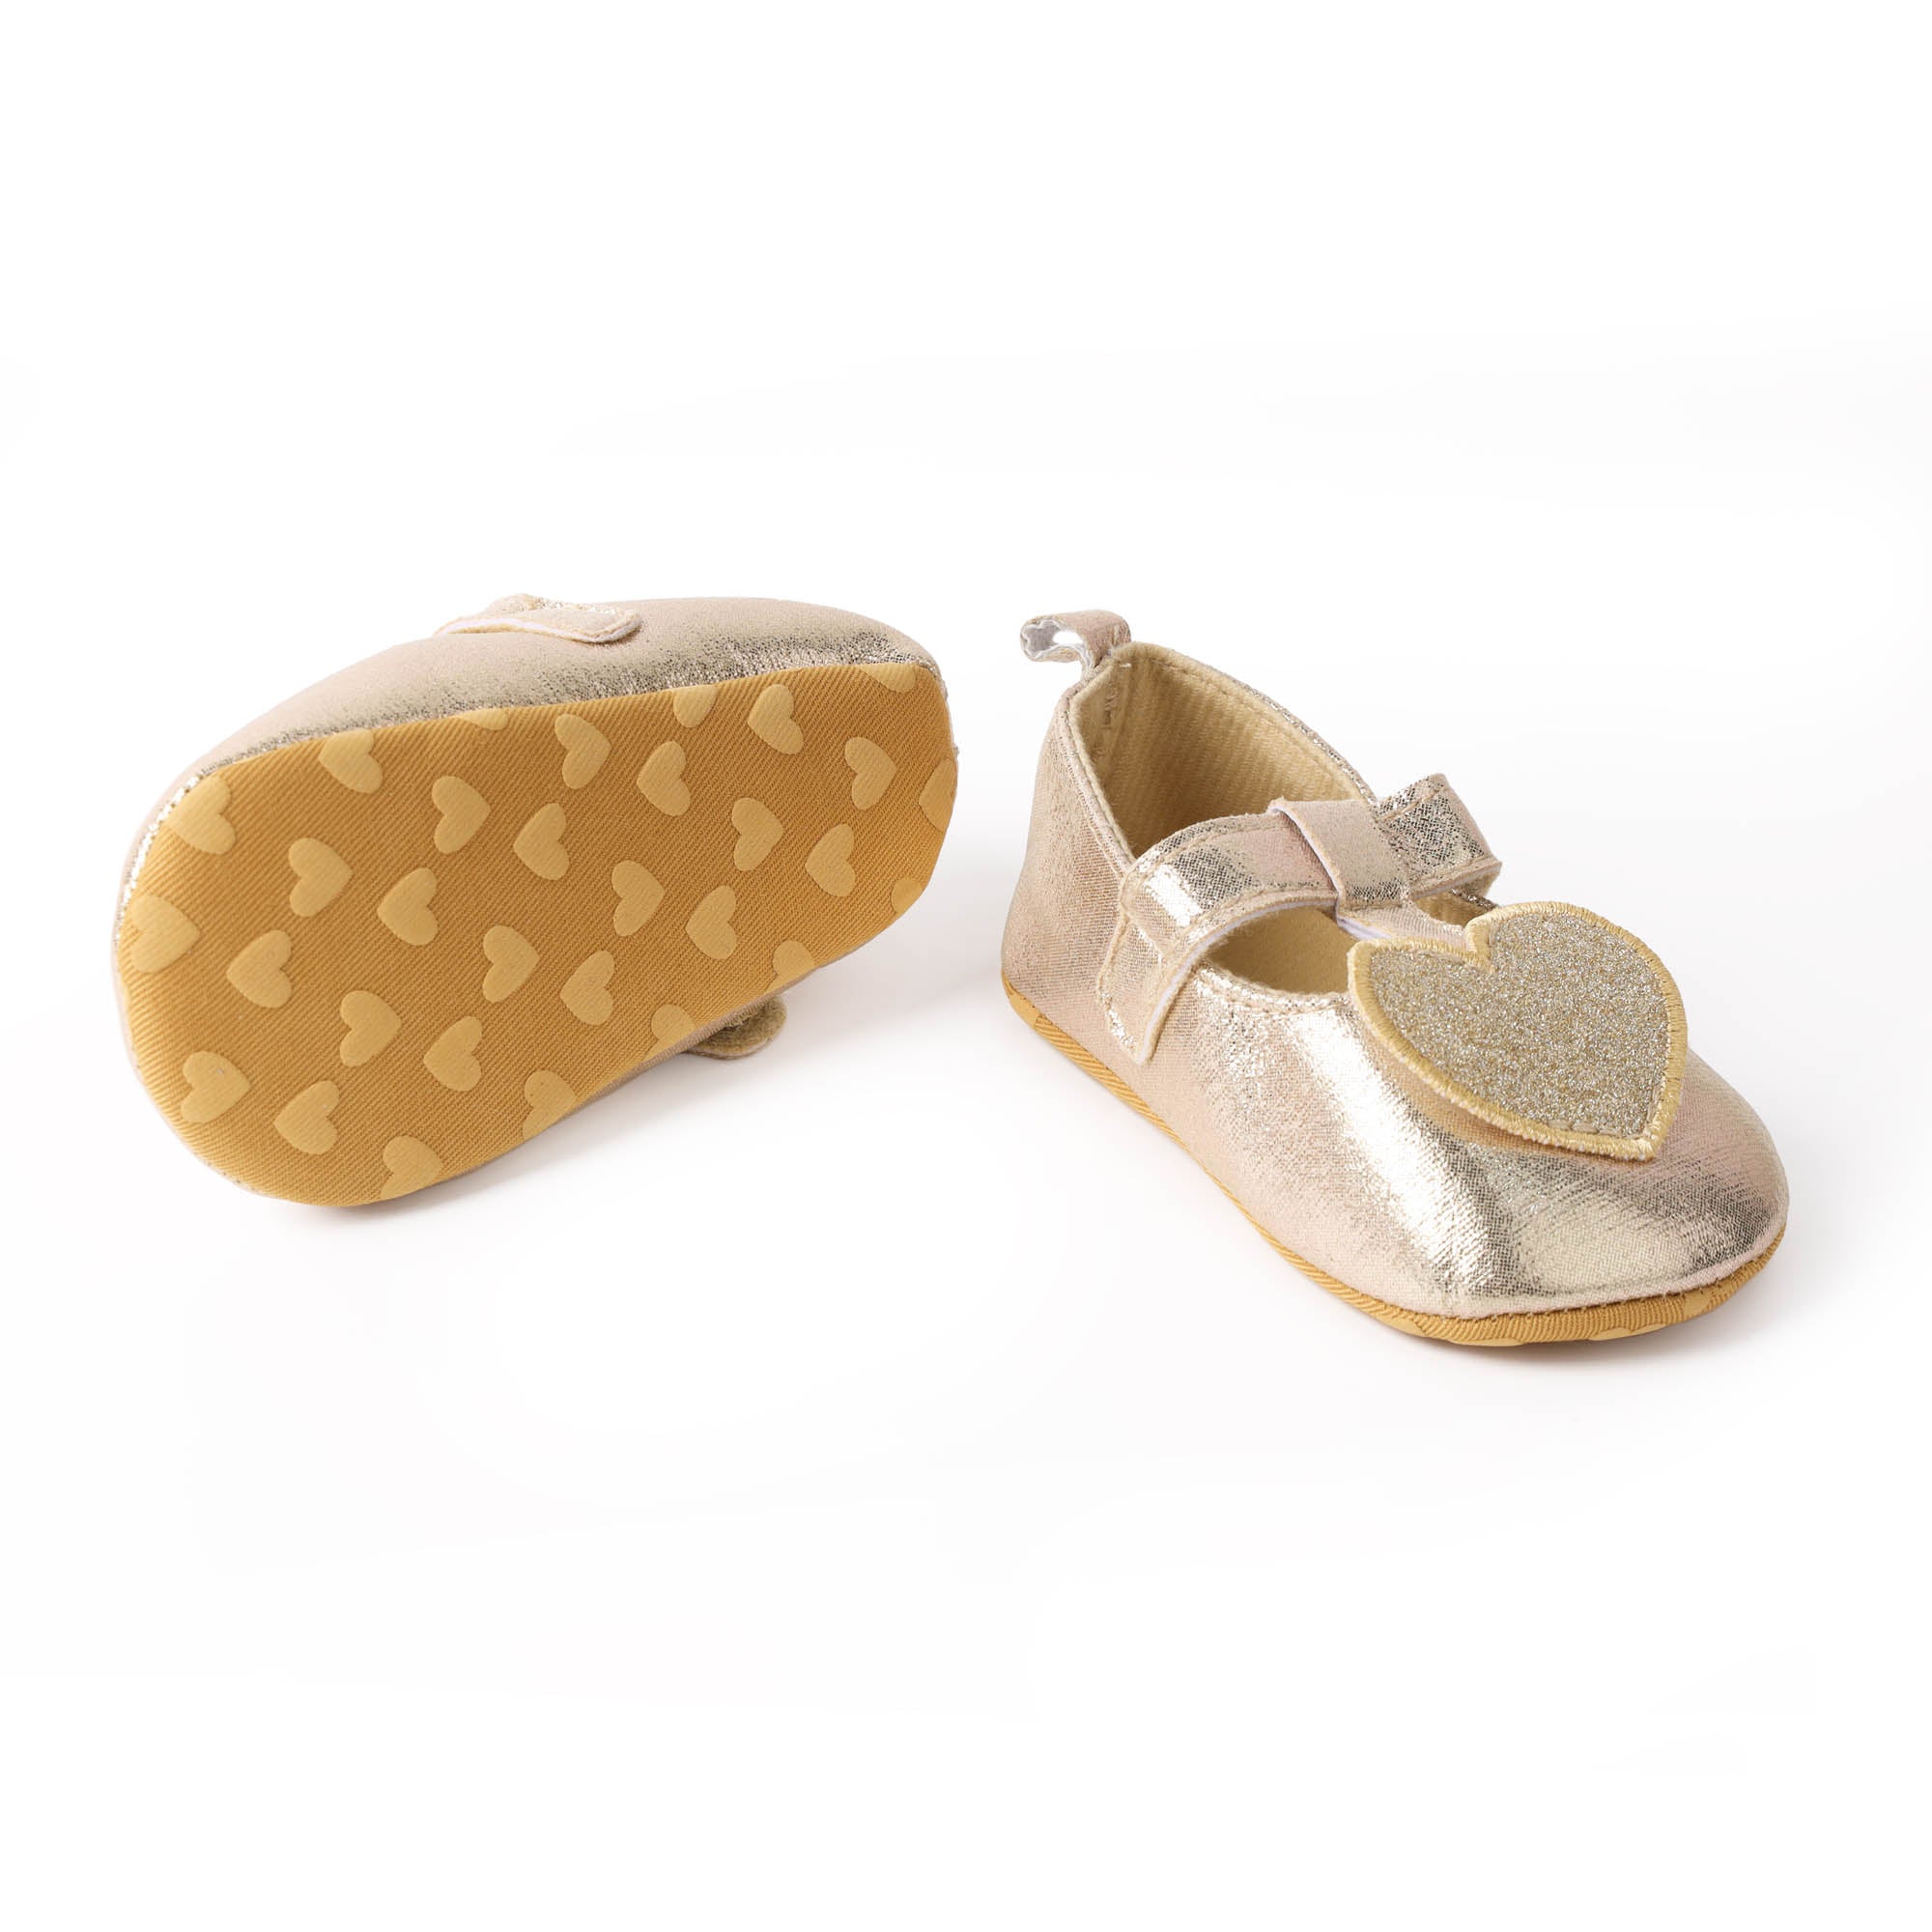 Kicks & Crawl- Heart of Gold Baby Sandals